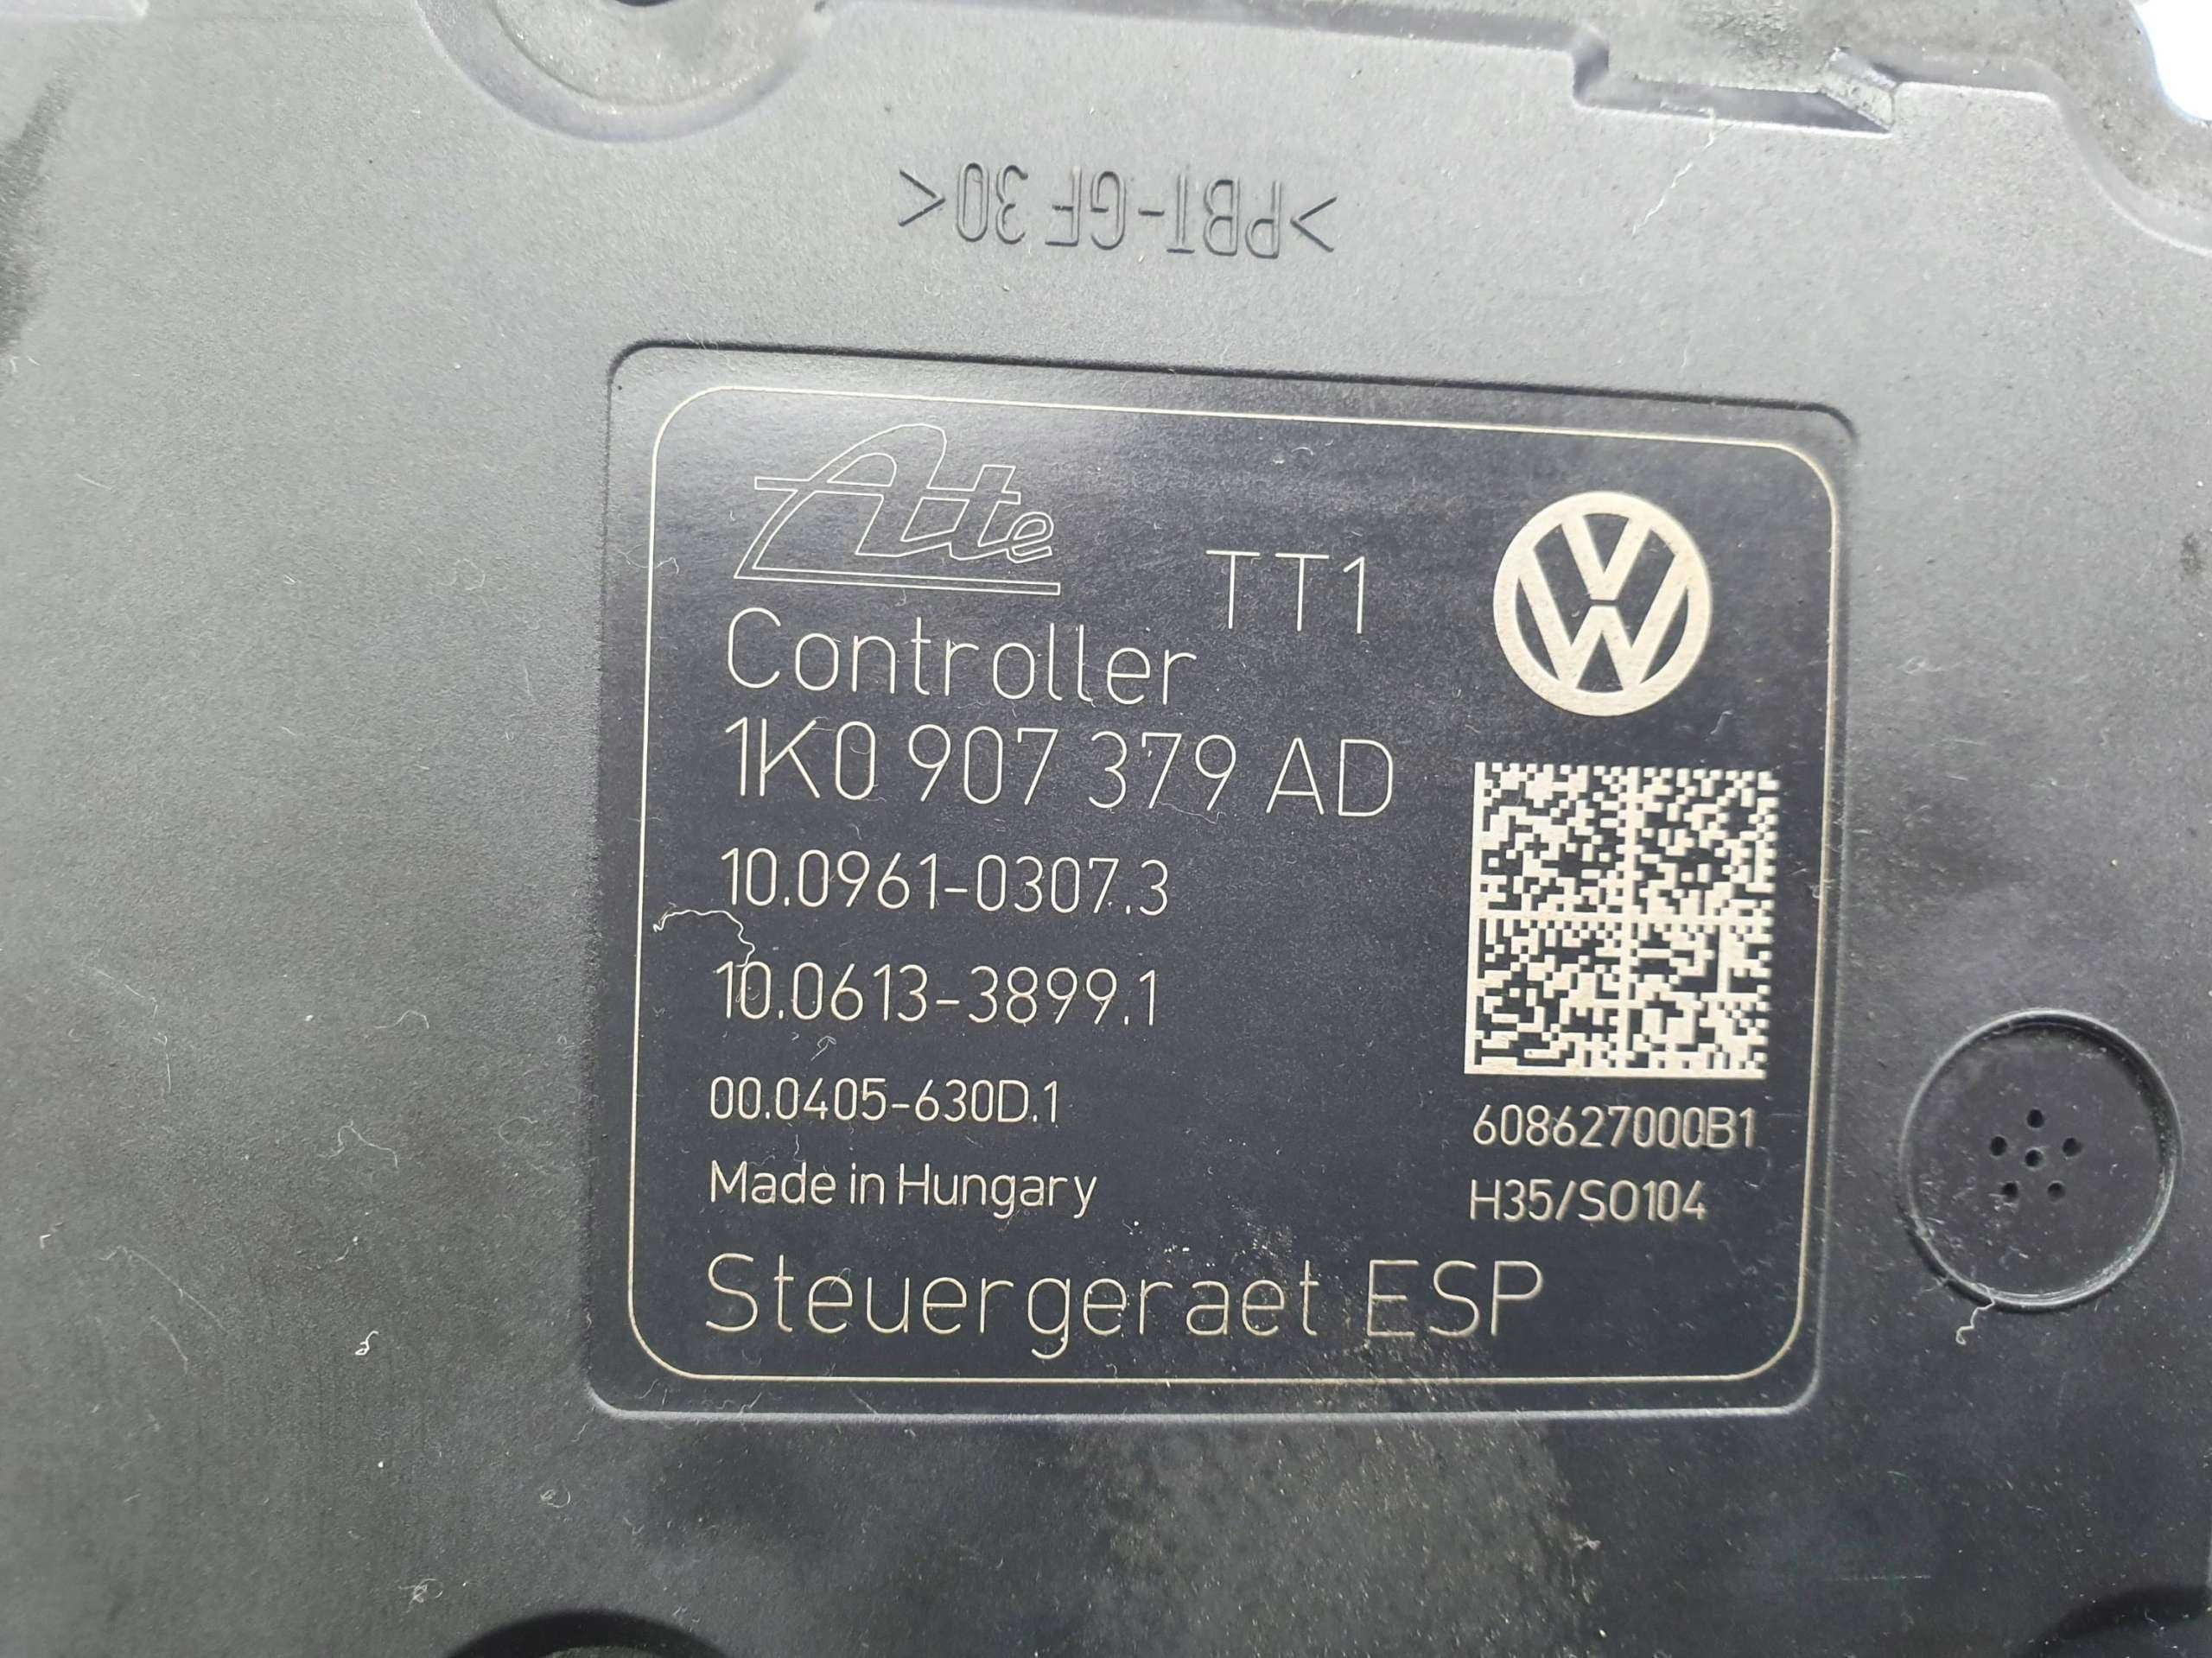 Naprawa ABS VW Audi Seat Skoda błąd 01130 błąd 16352